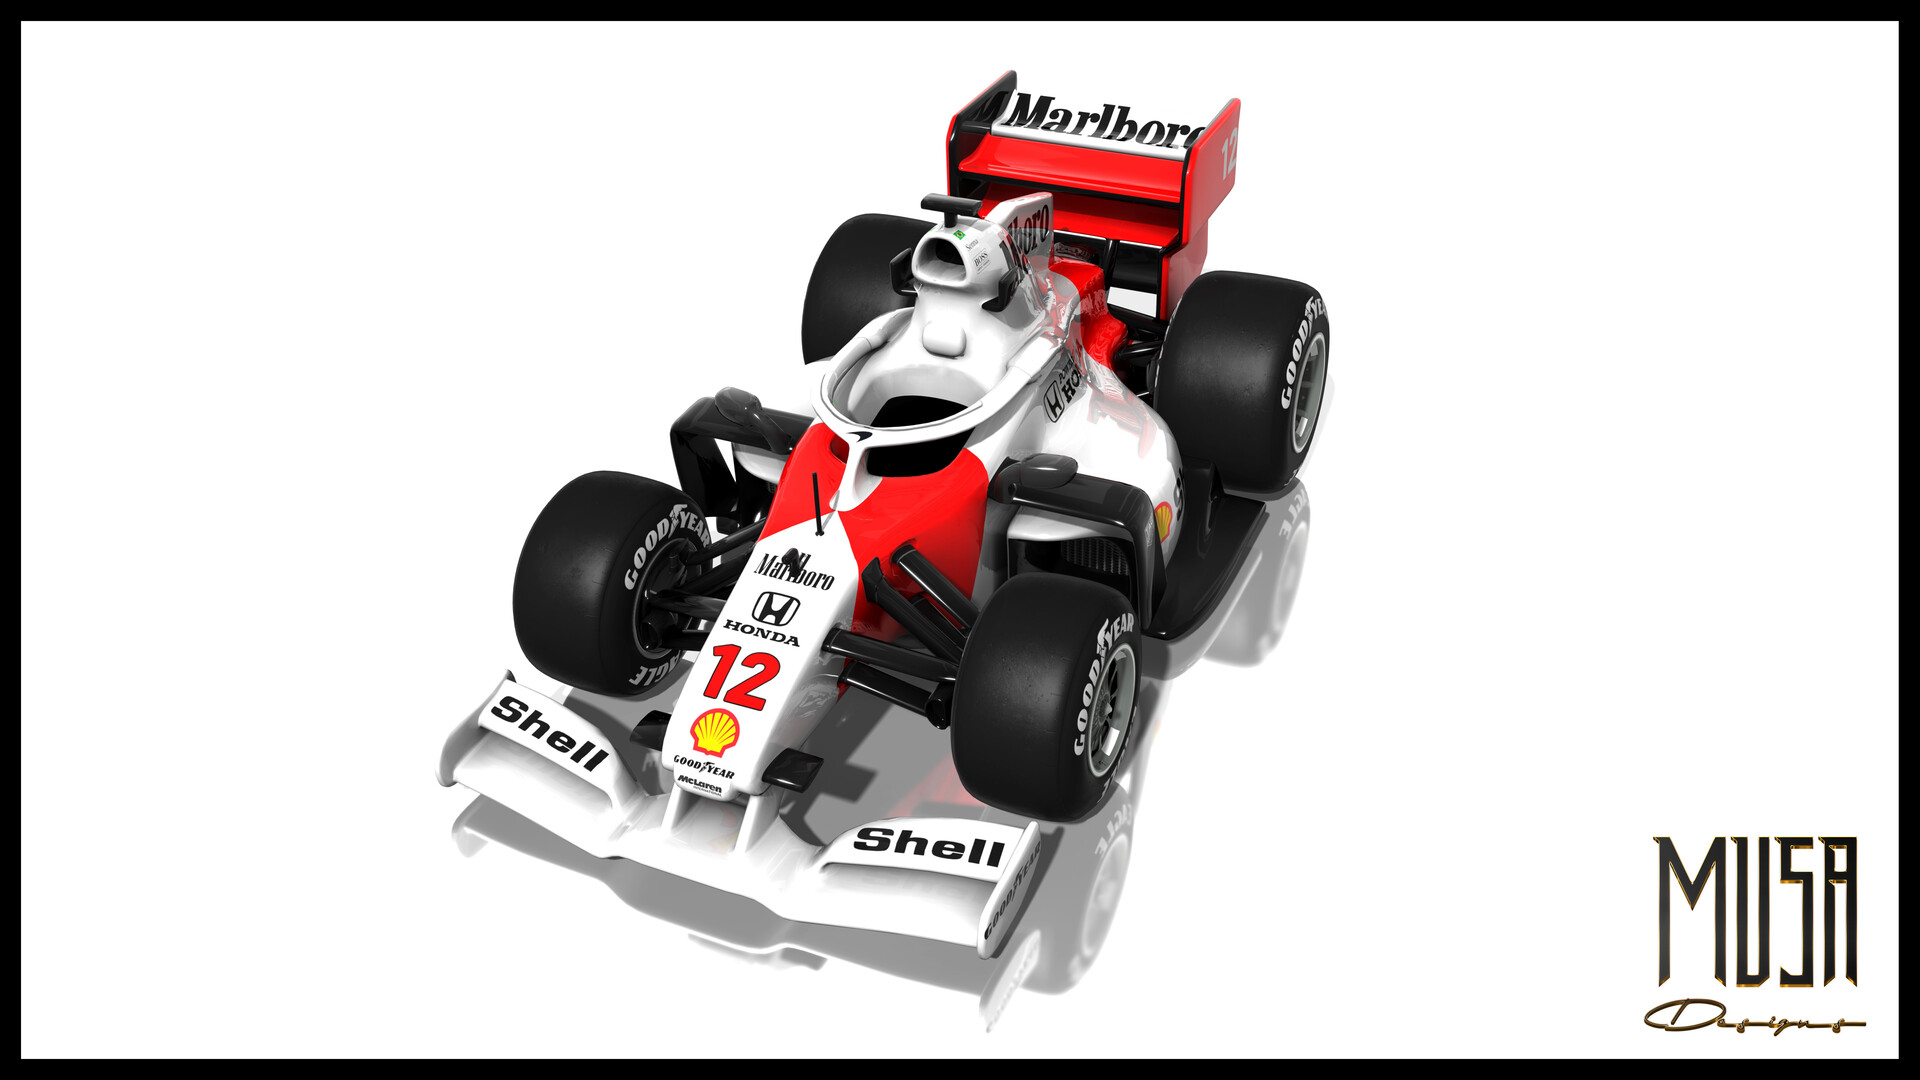 ArtStation - Miniature F1 Car X McLaren MP4/4 Livery